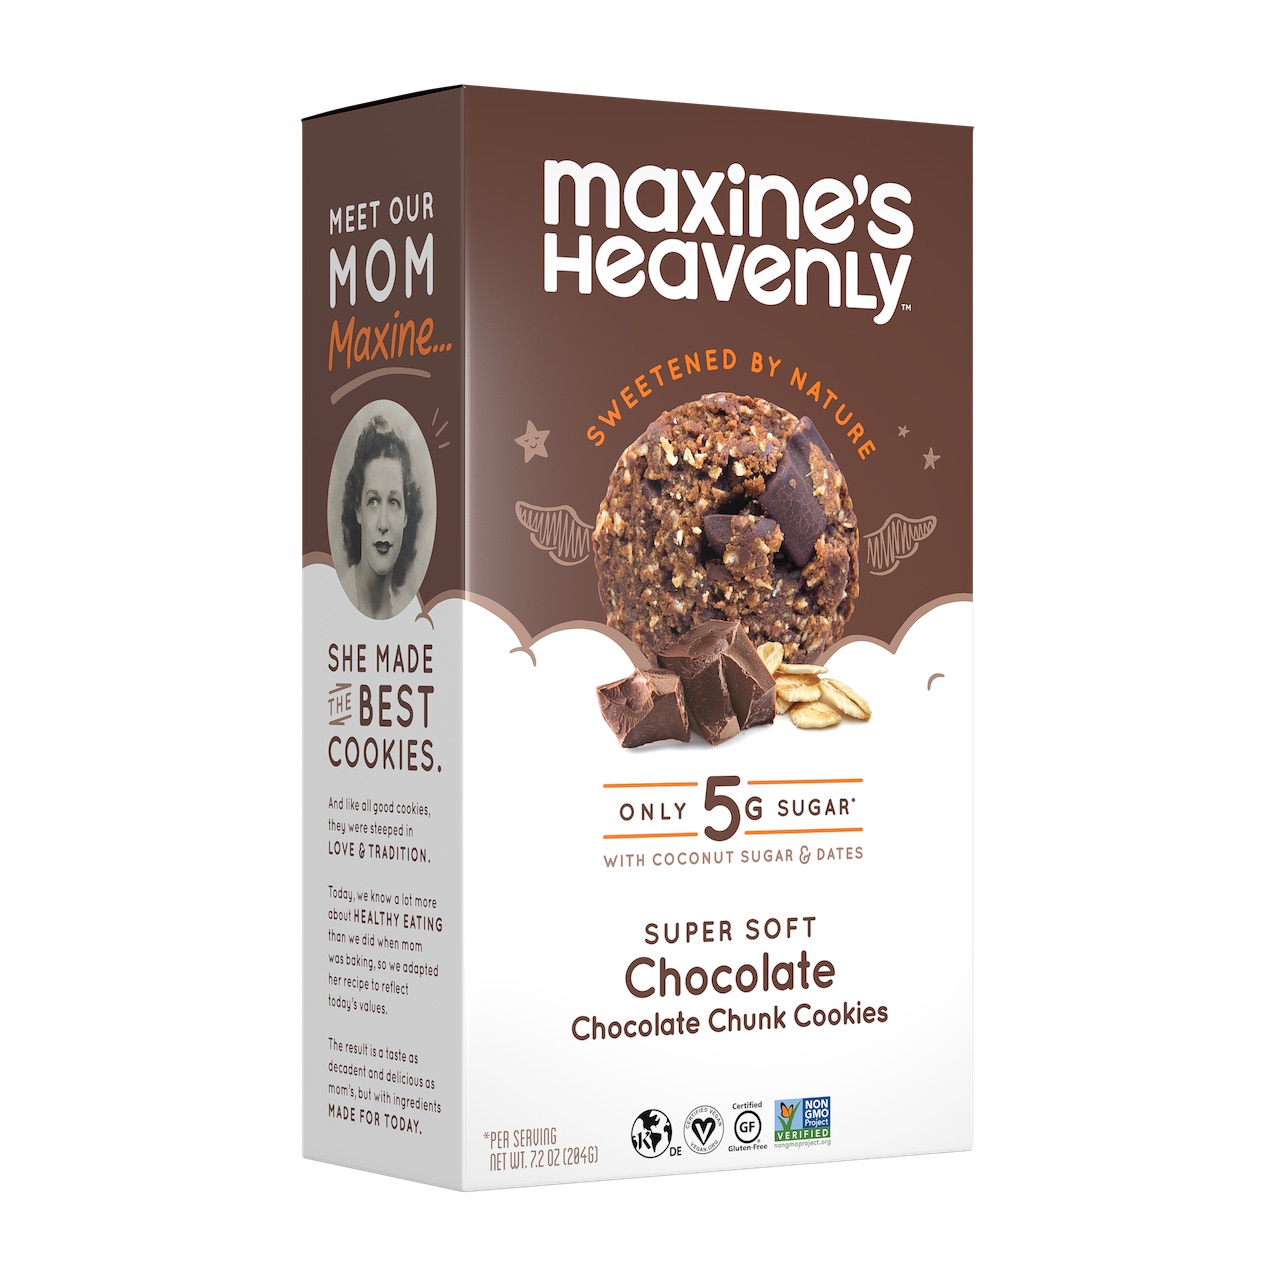 A box of Maxine's Heavenly Chocolate Chocolate Chunk Cookies